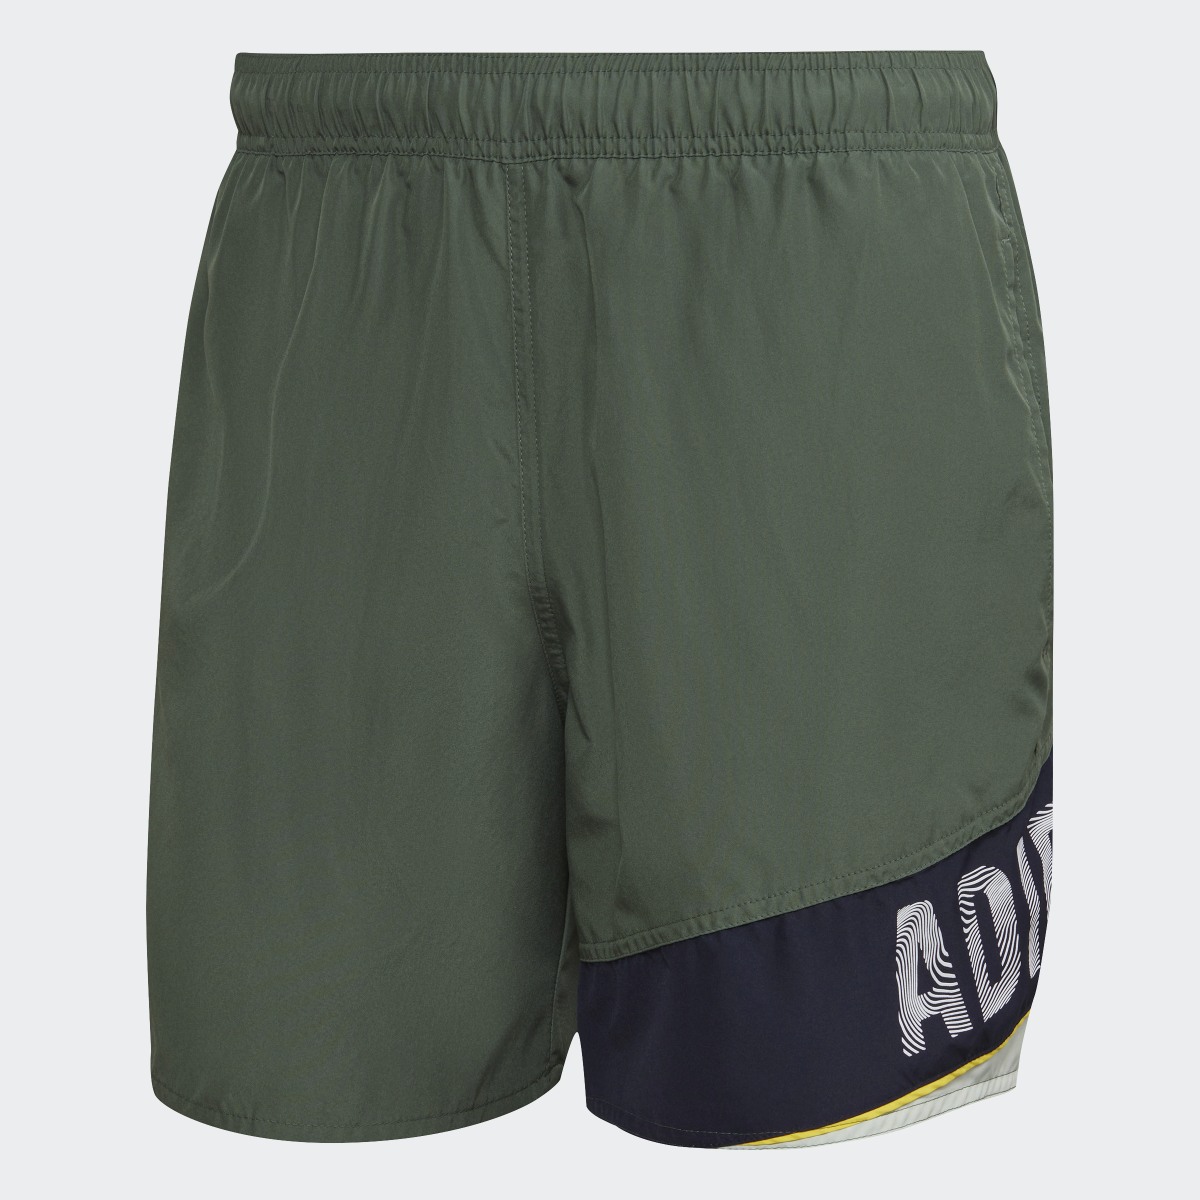 Adidas Wording Swim Shorts. 4